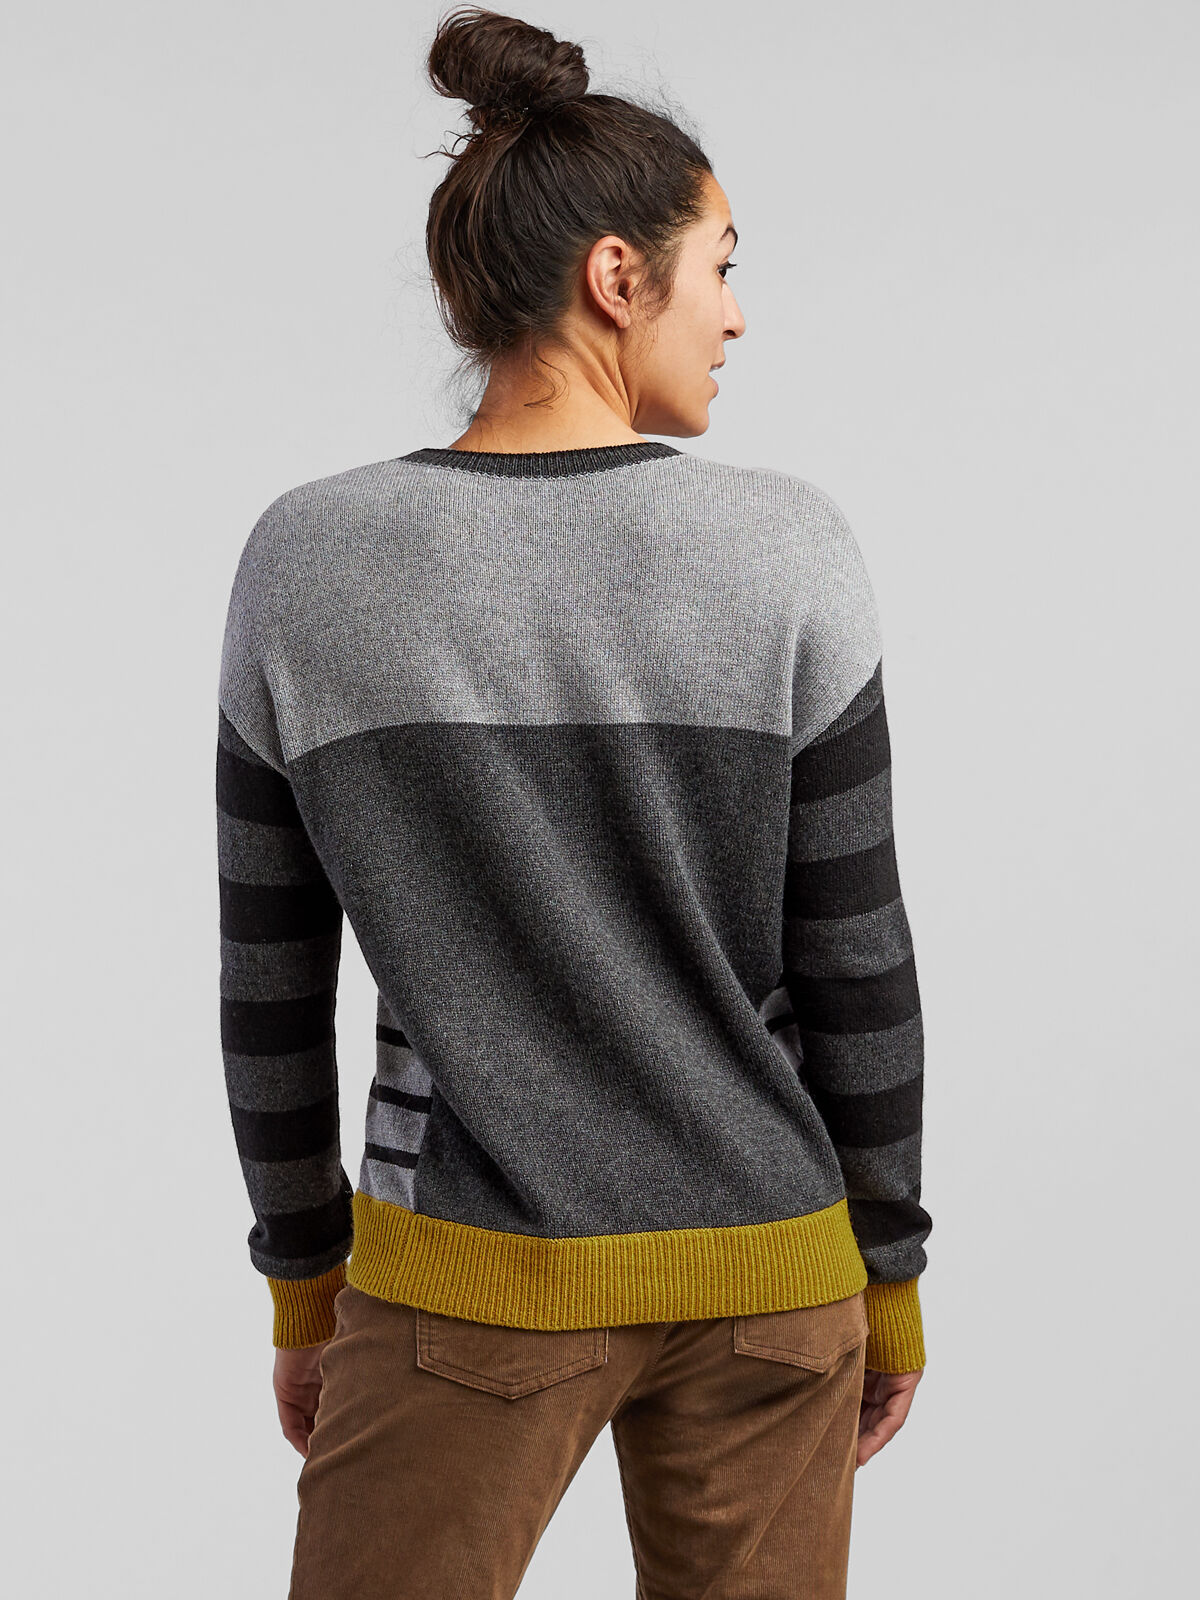 A La Mode Crew Neck Sweater